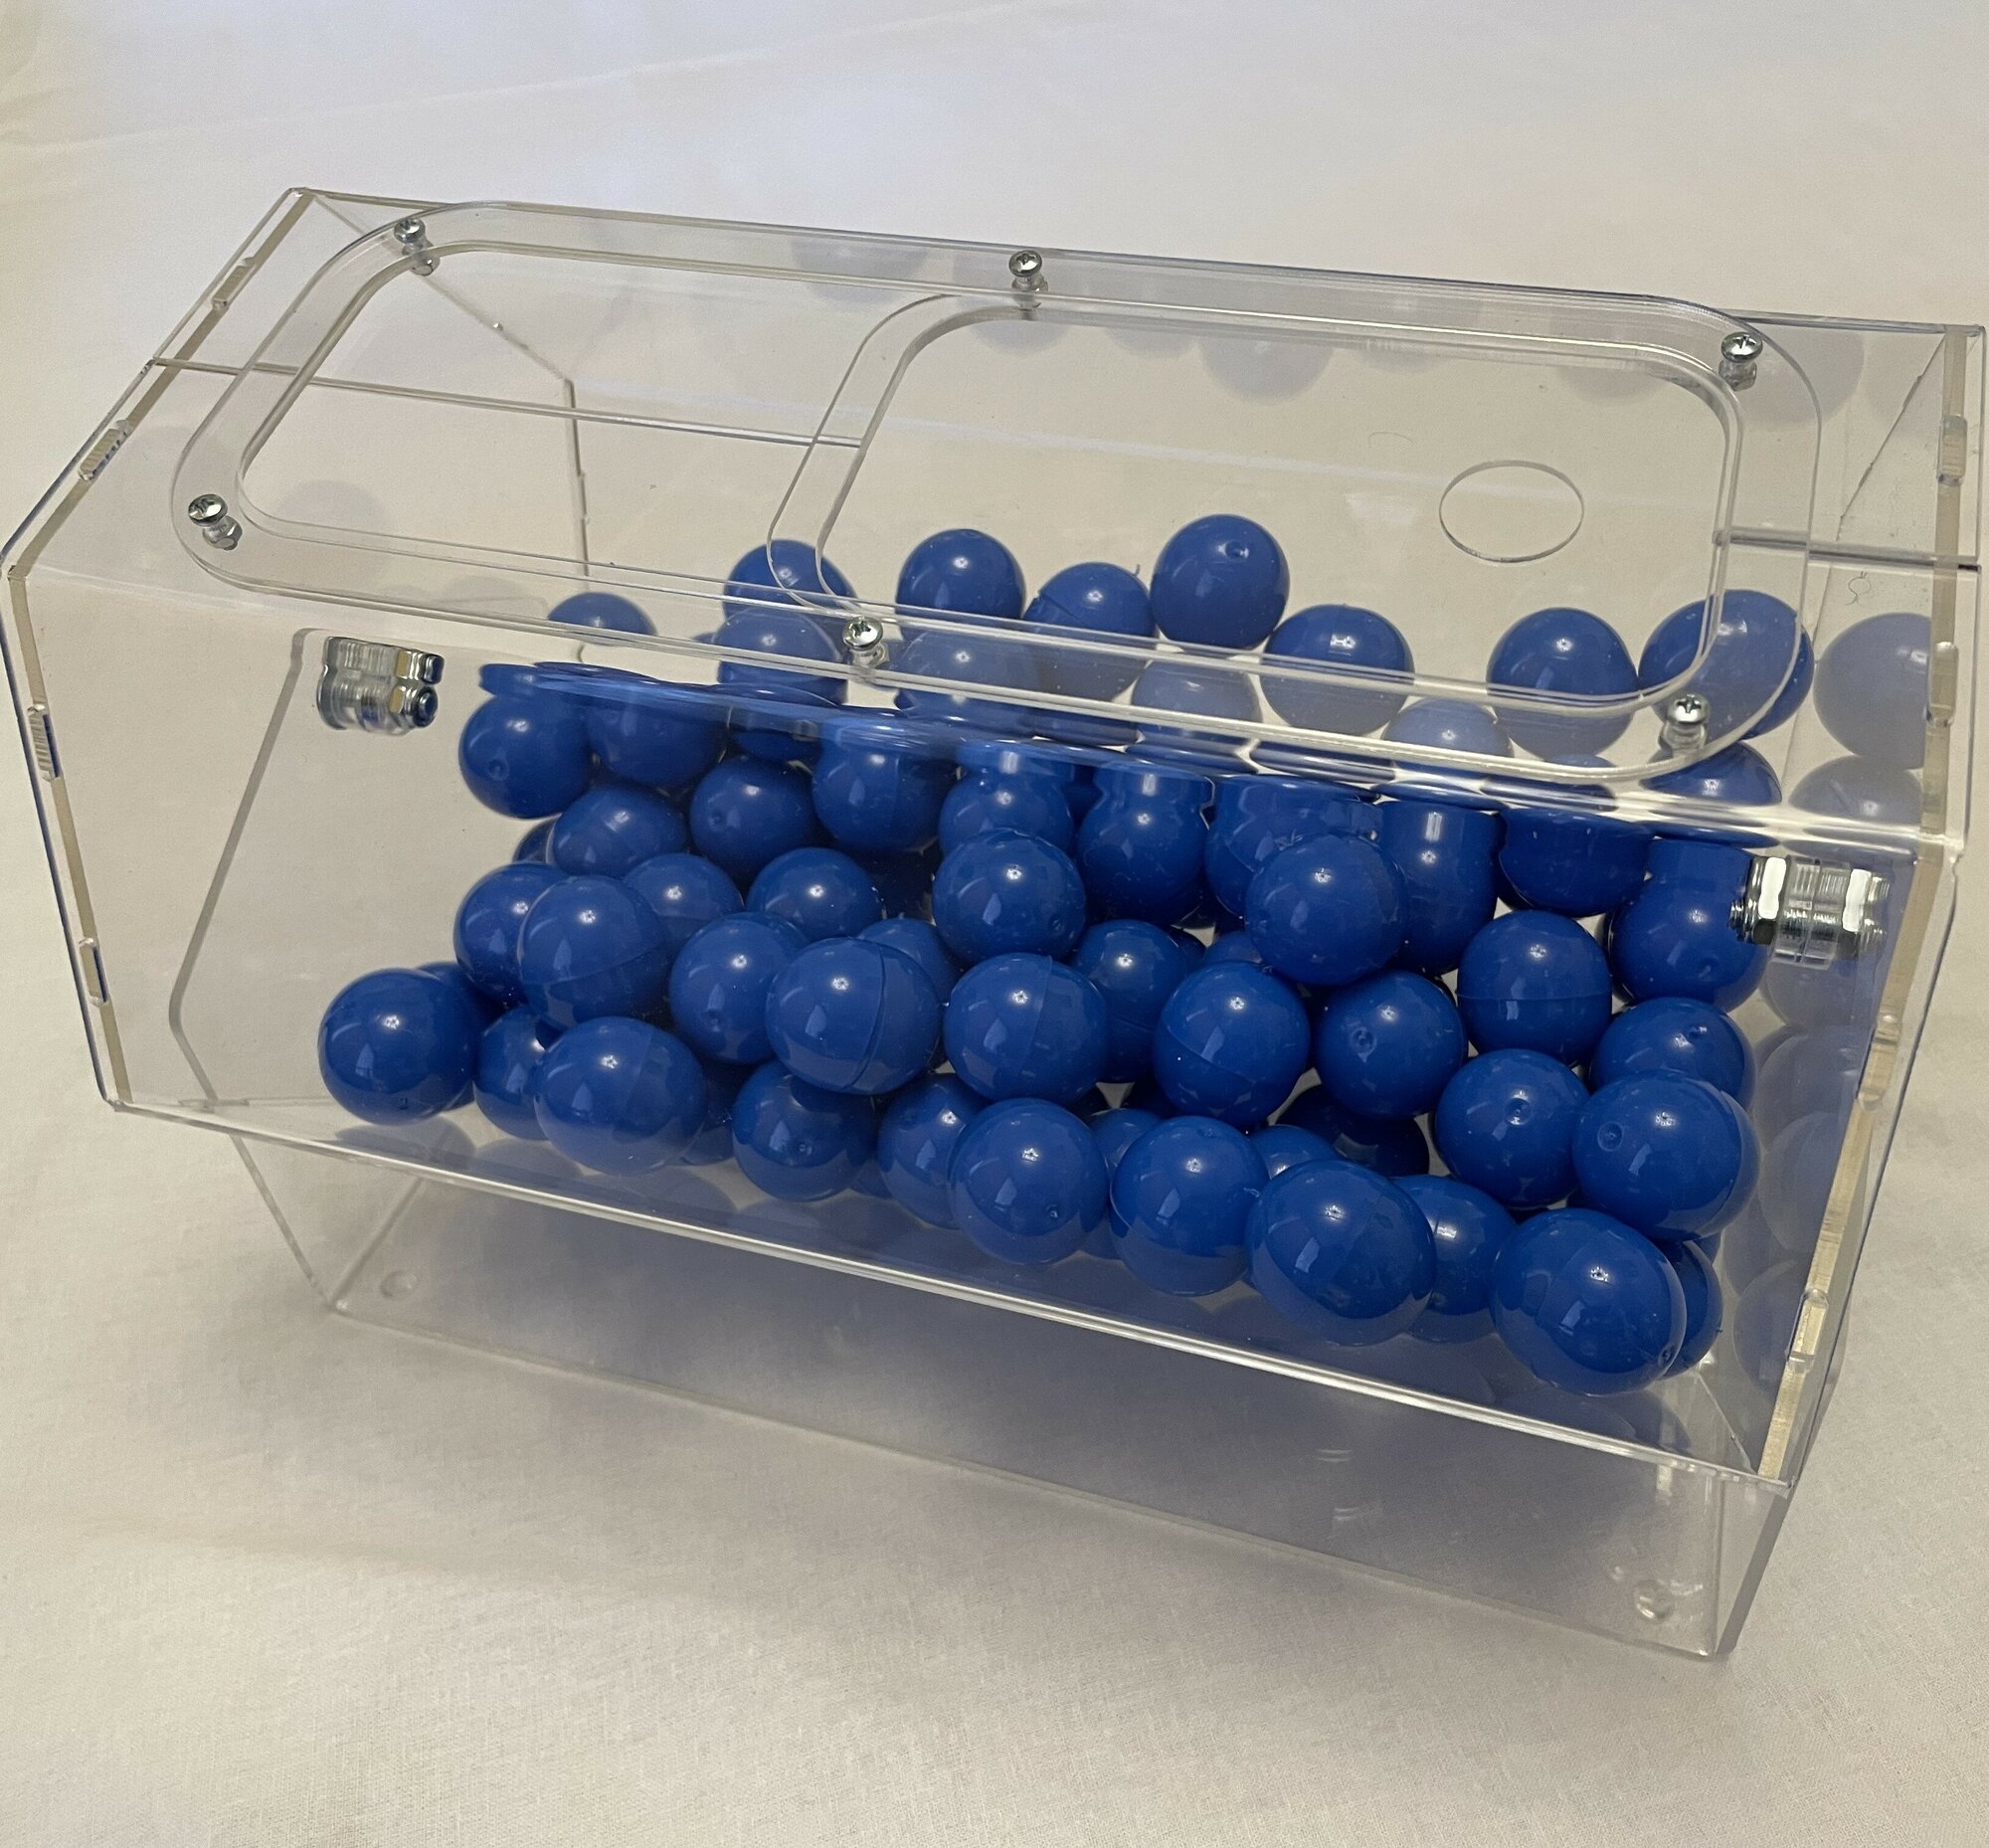 Лототрон большой (500х300 мм) из 3-х мм оргстекла + 500 синих шариков